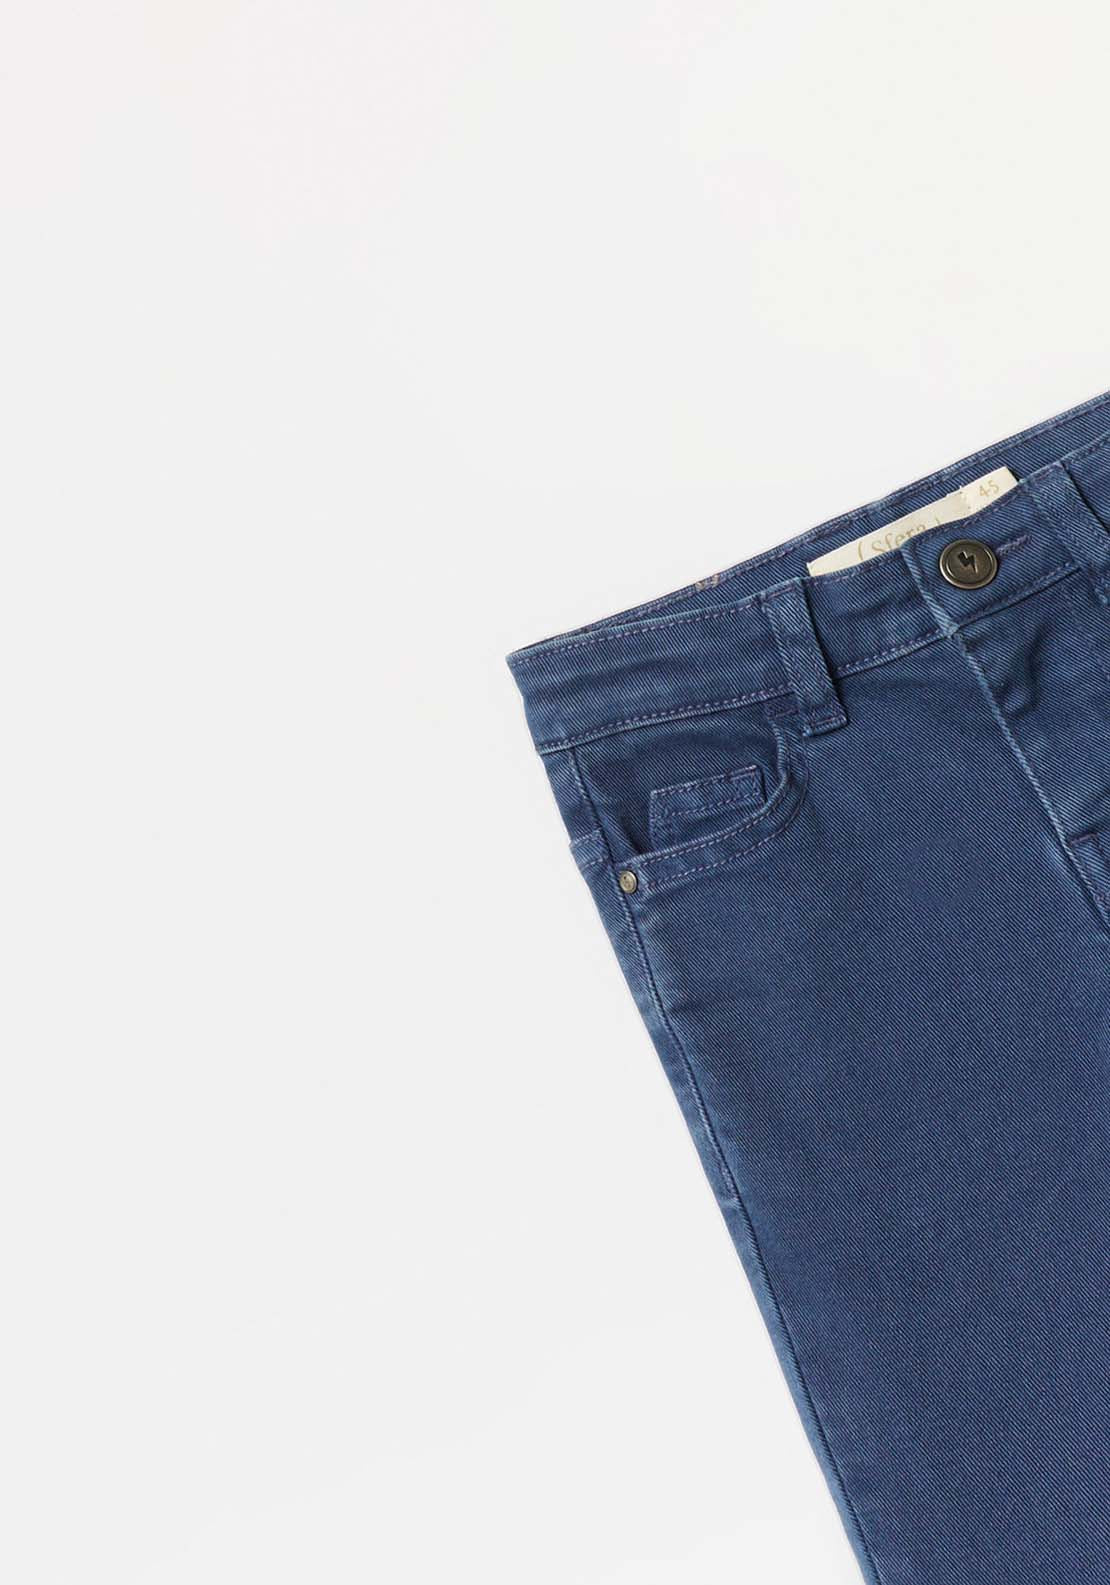 Sfera Denim Jeans - Navy / Blue 4 Shaws Department Stores